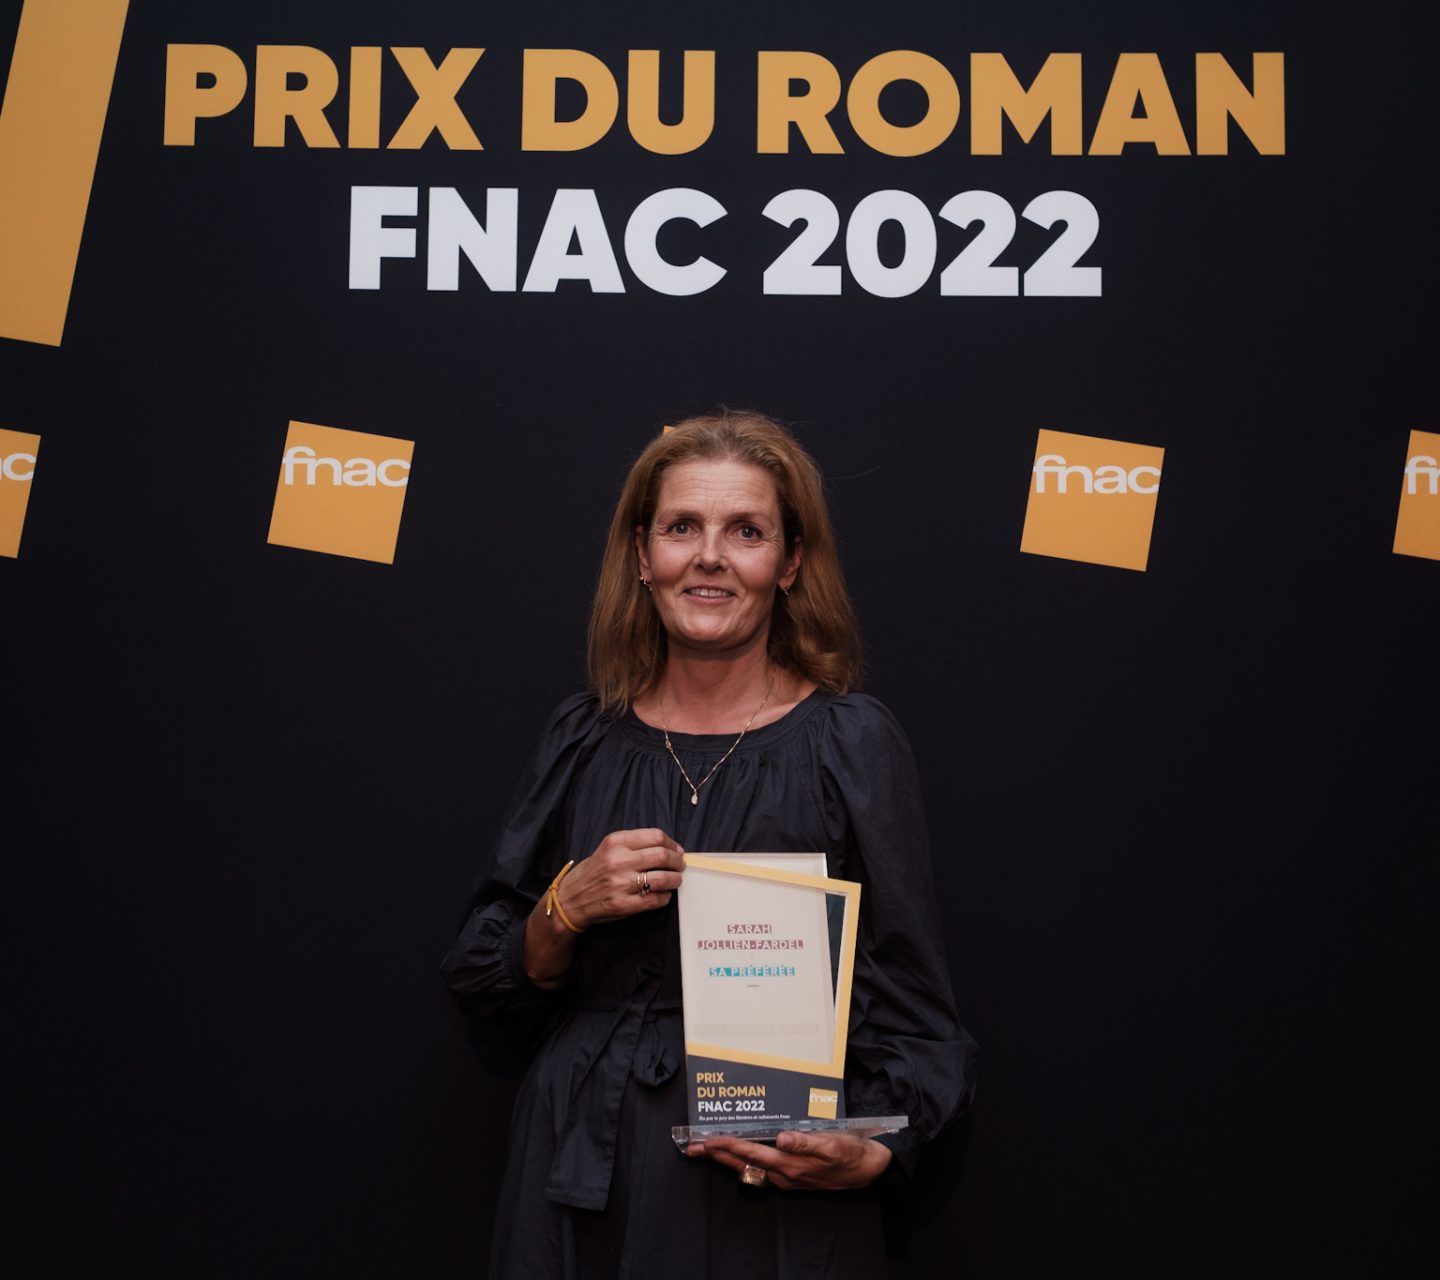 Jean-Baptiste Andrea wins the Prix du Roman Fnac 2023 for